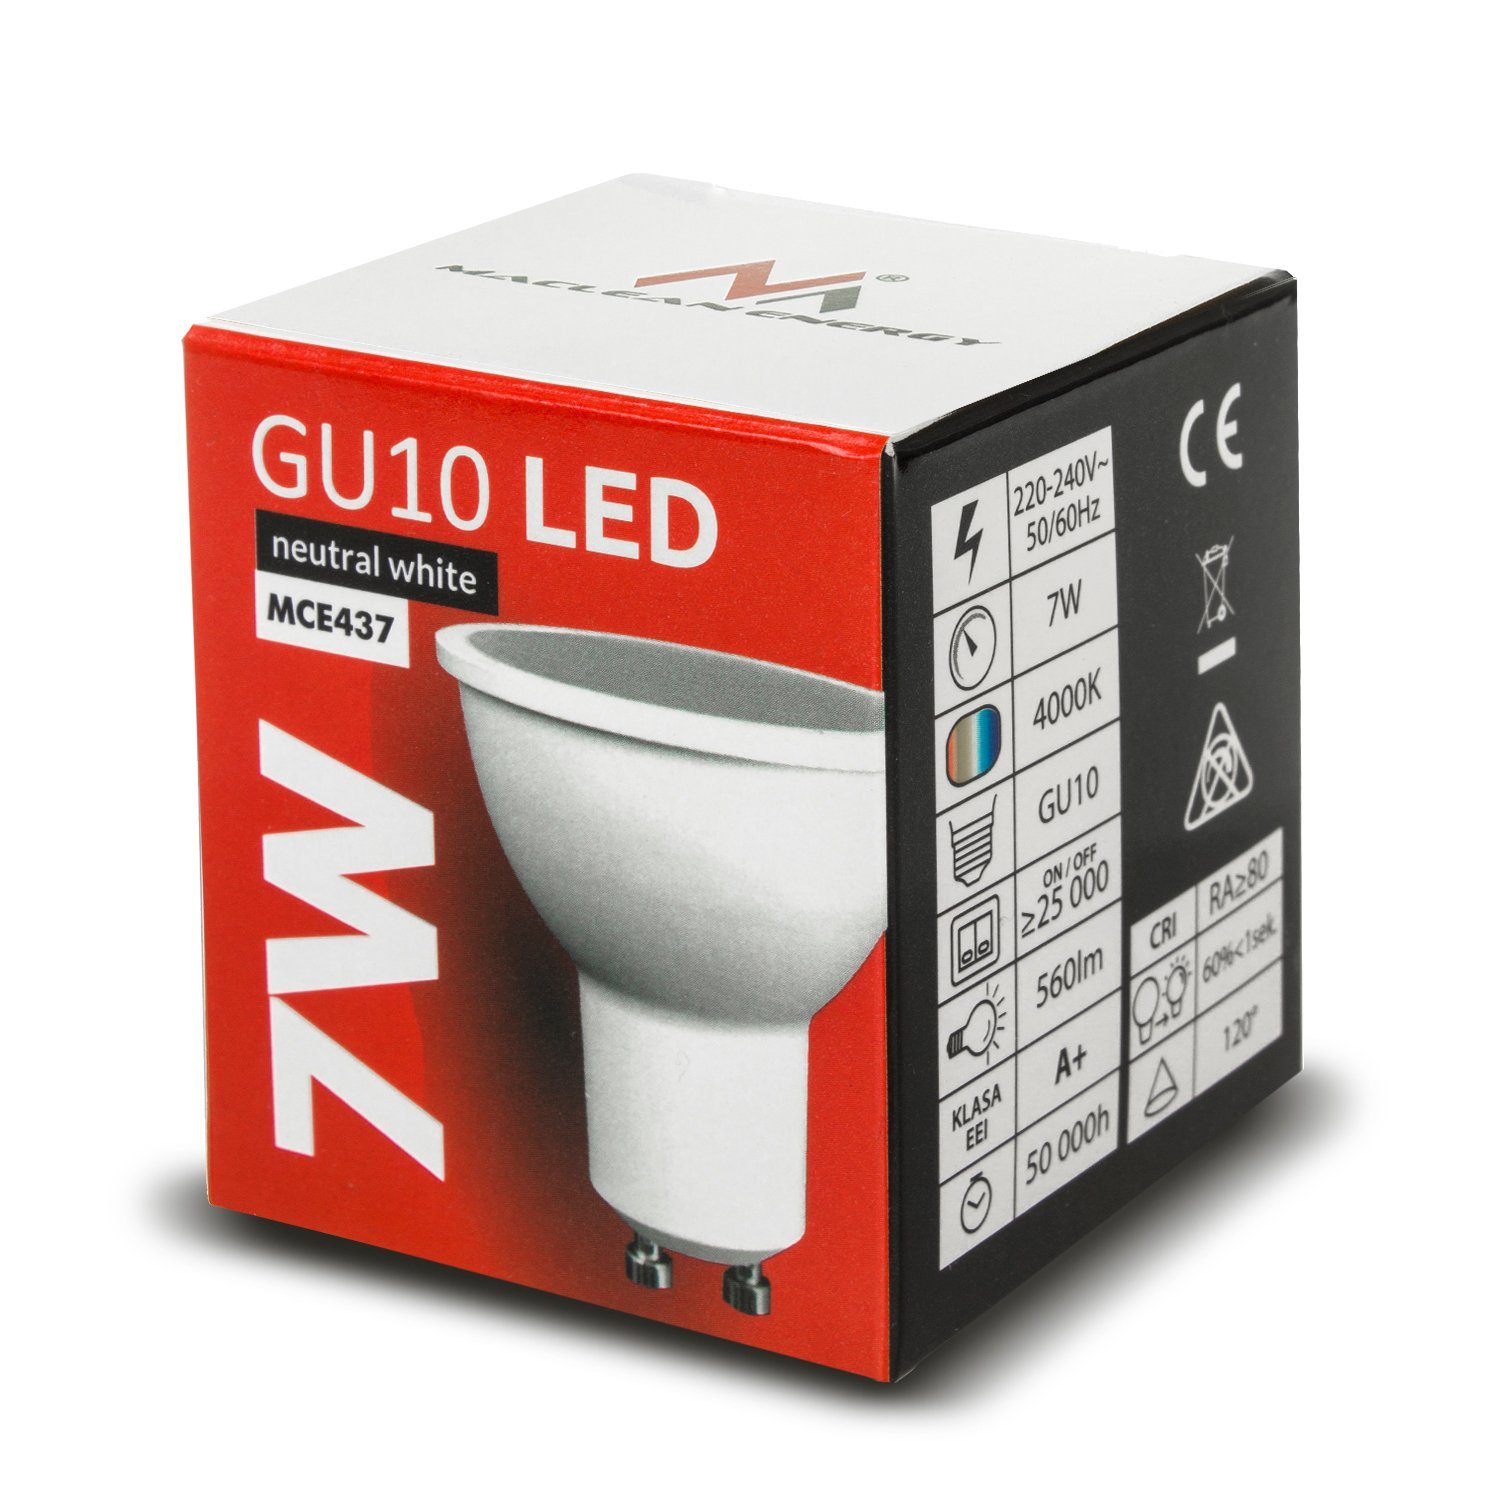 MCE437 GU10 Neutralweiß Maclean GU10, - NW, LED-Leuchtmittel 4000K LED-Leuchtmittel 7W